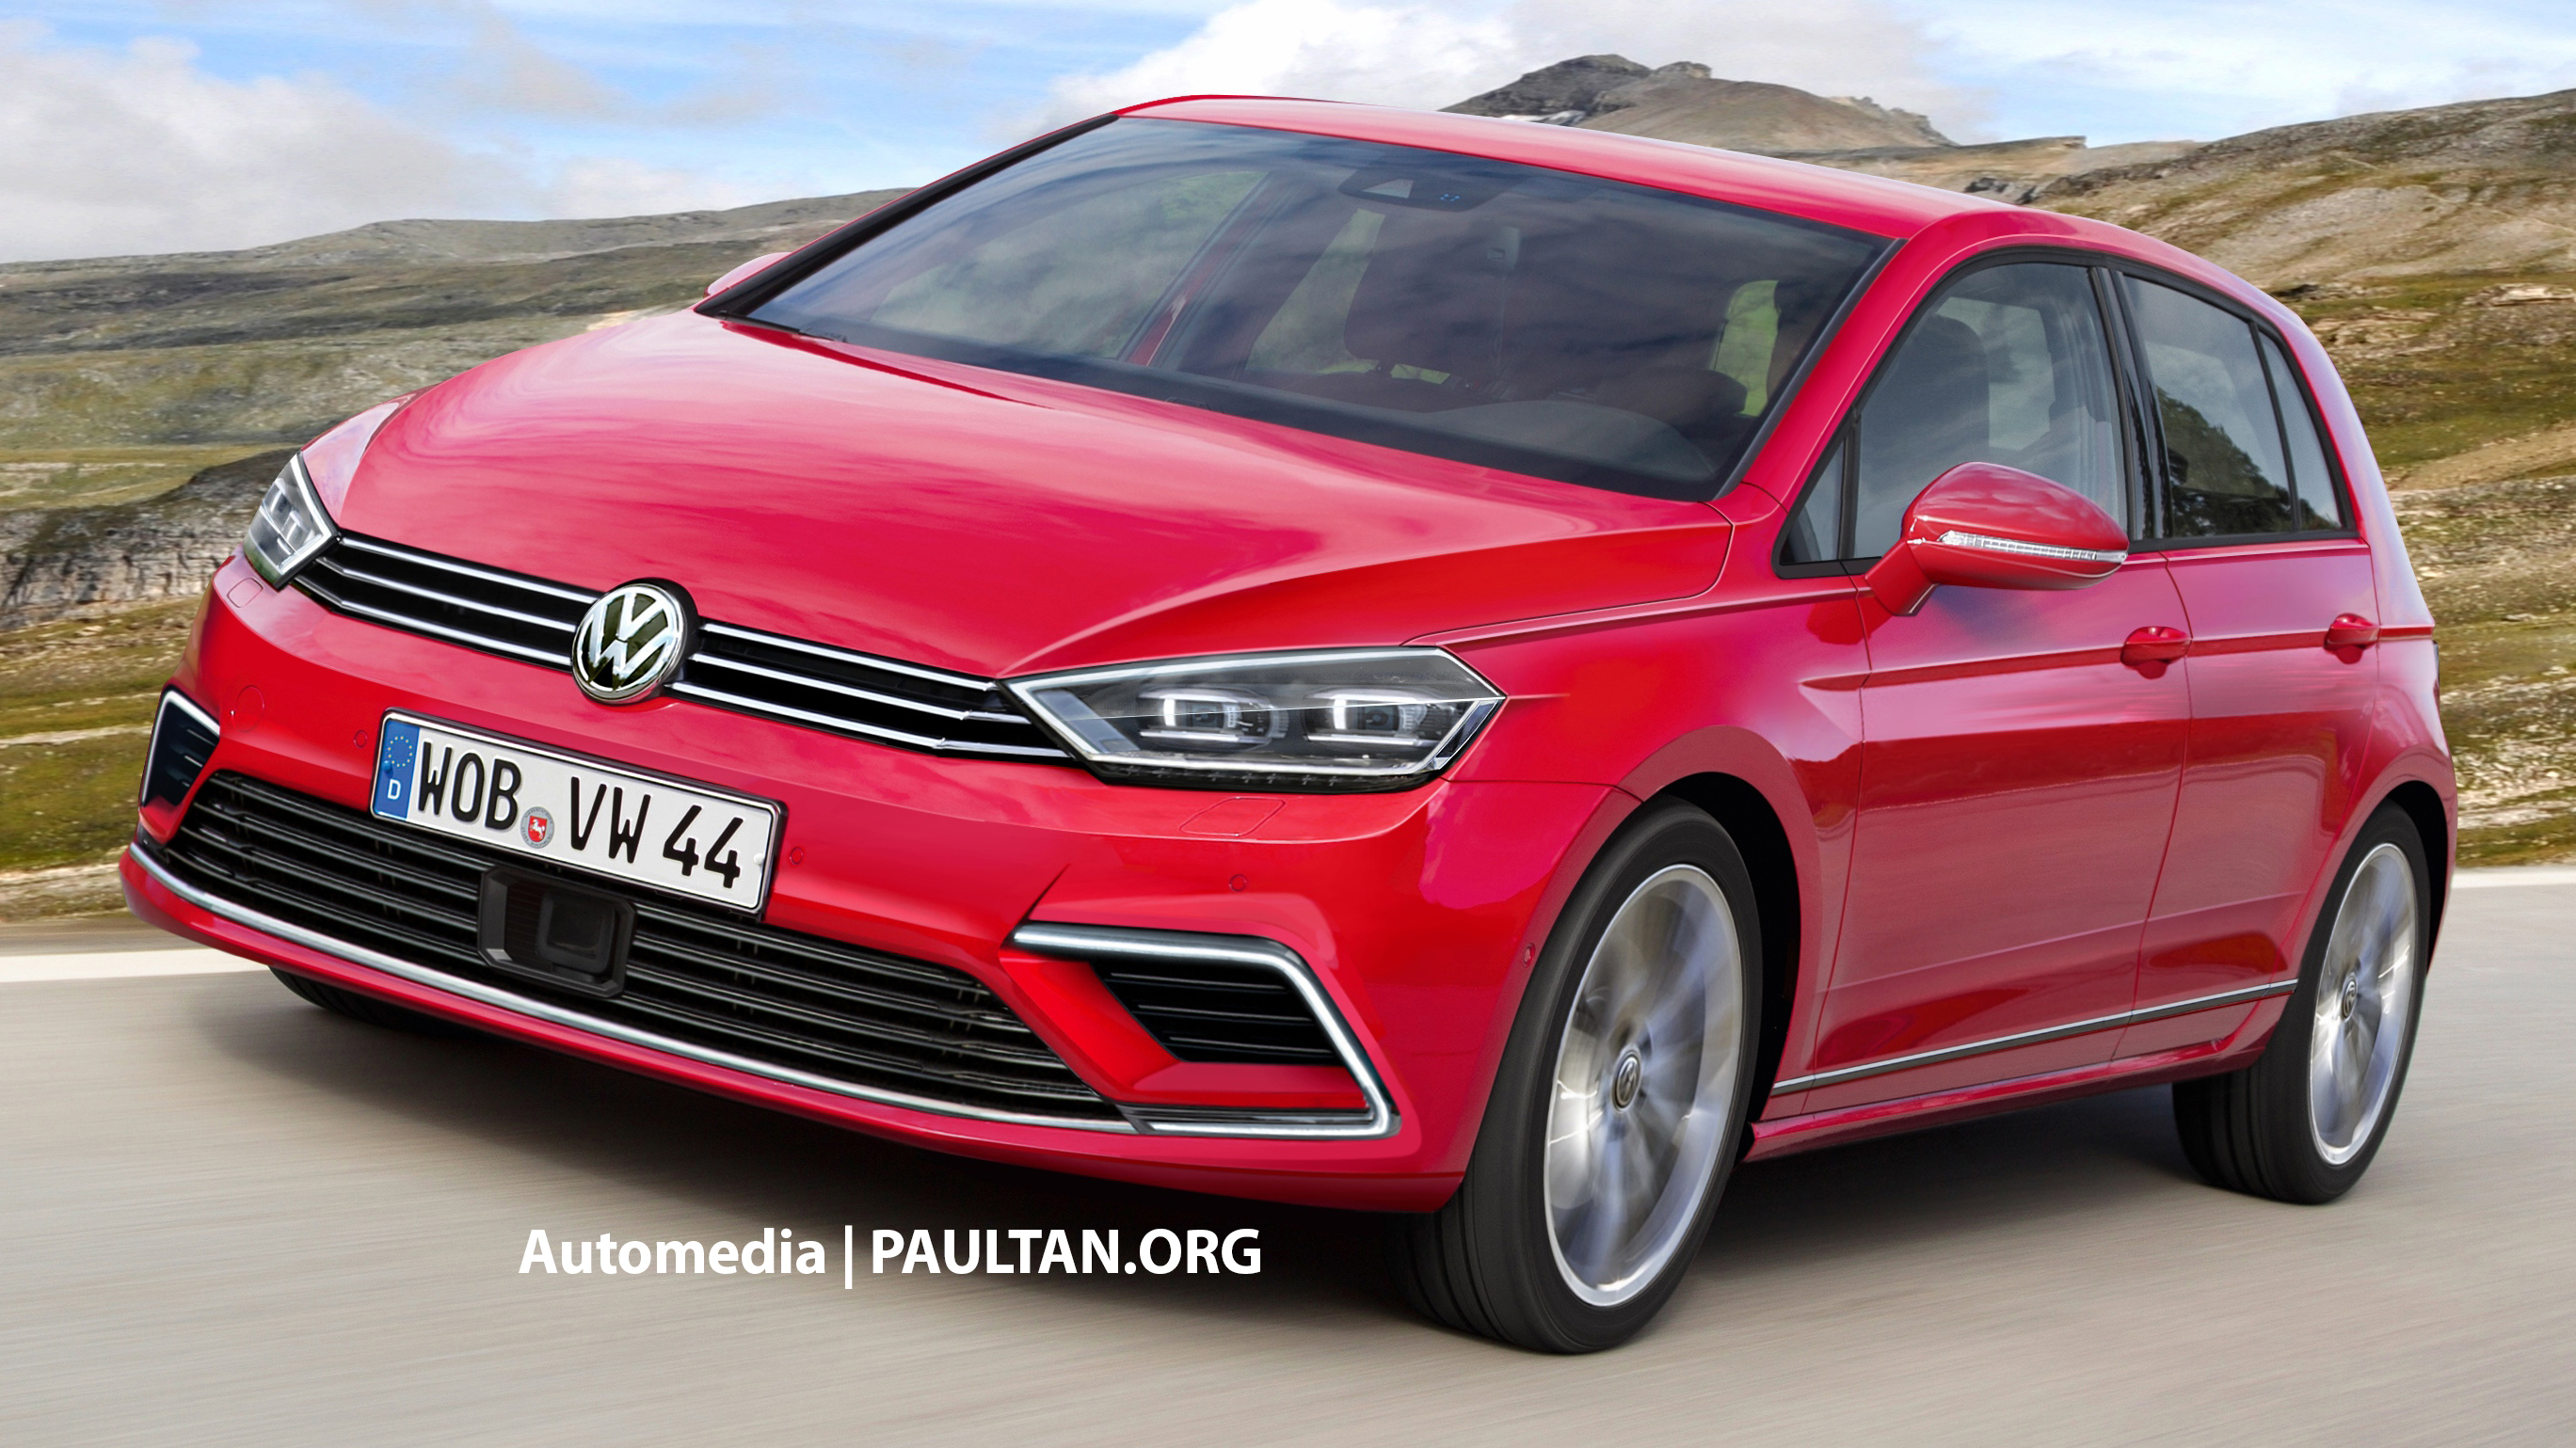 2024 Volkswagen Golf Facelift Rendered Based On Revealing Spy Shots